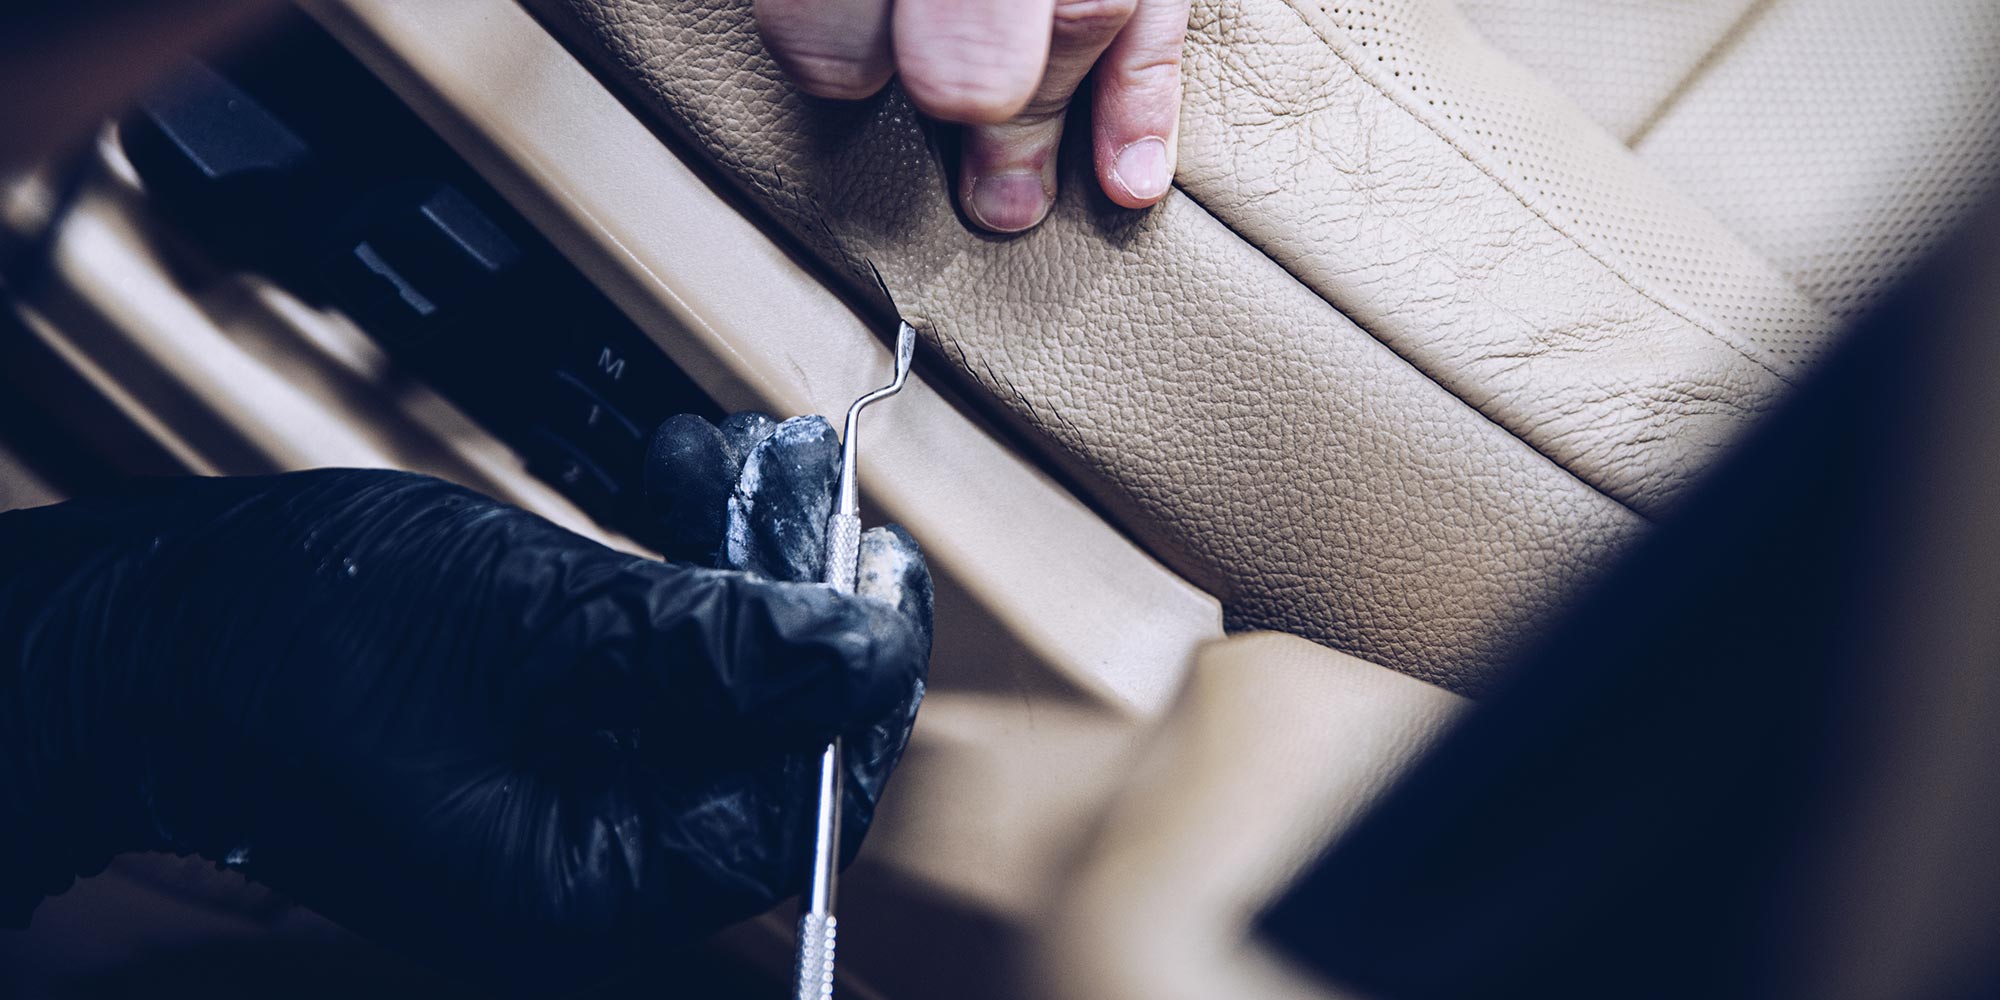 What Is Car Upholstery Repair?